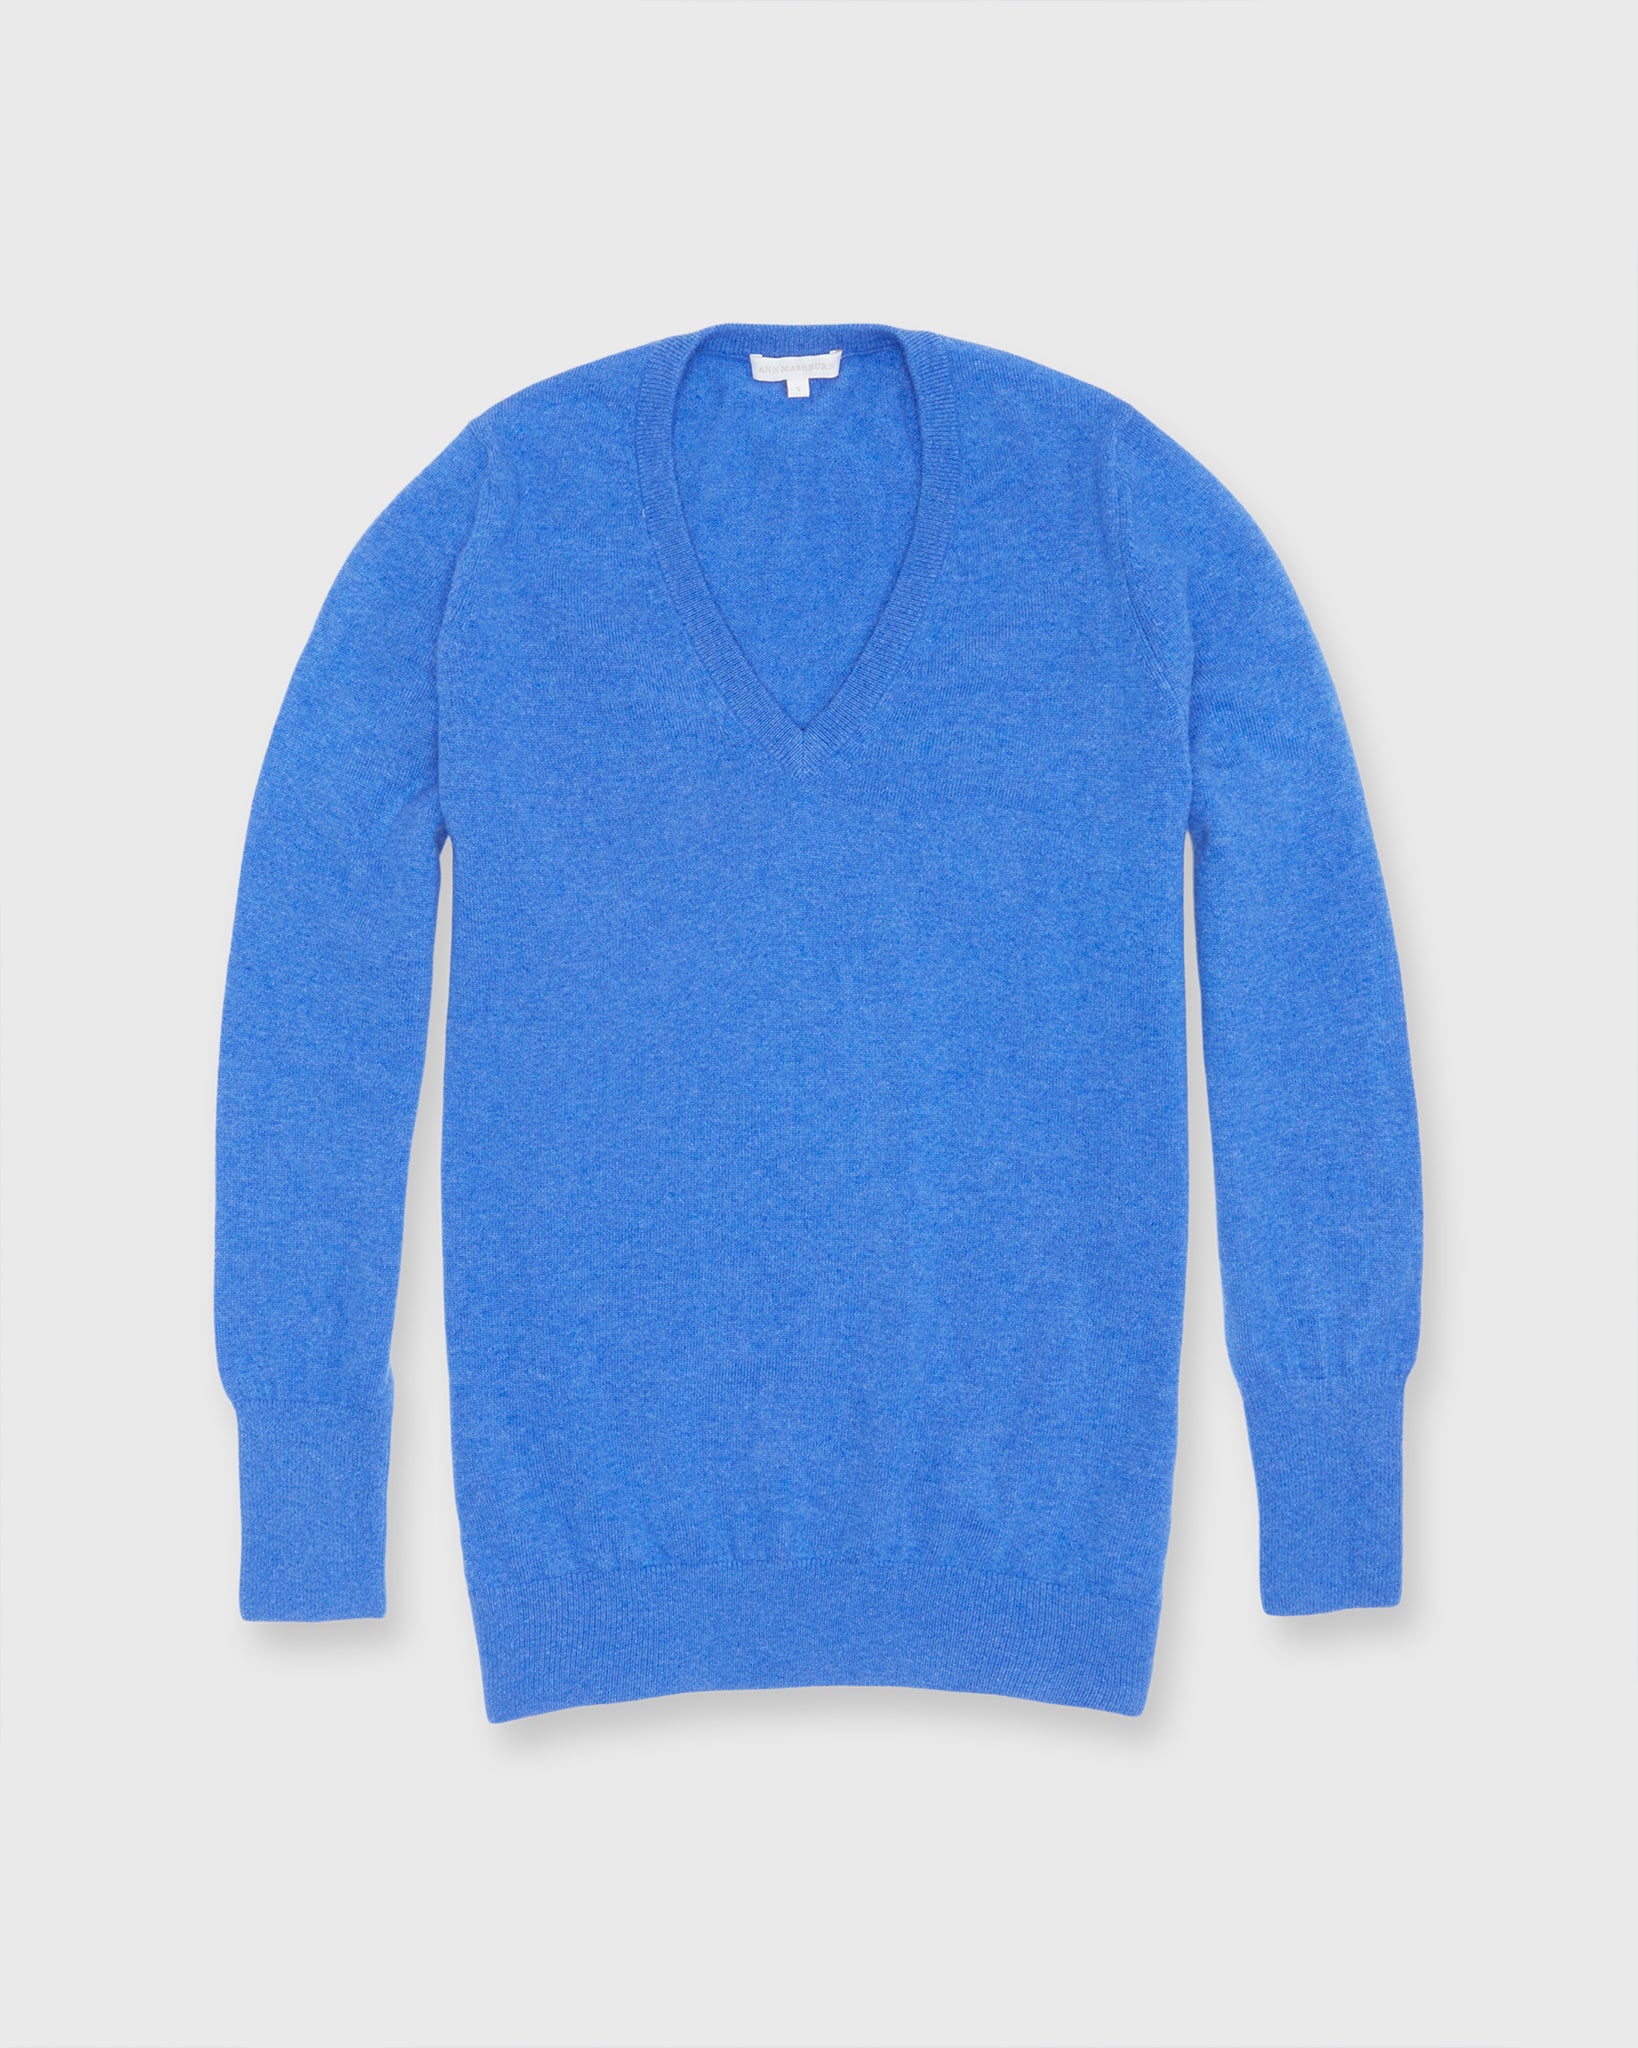 Cydney Boyfriend V-Neck Sweater in Bright Blue Cashmere